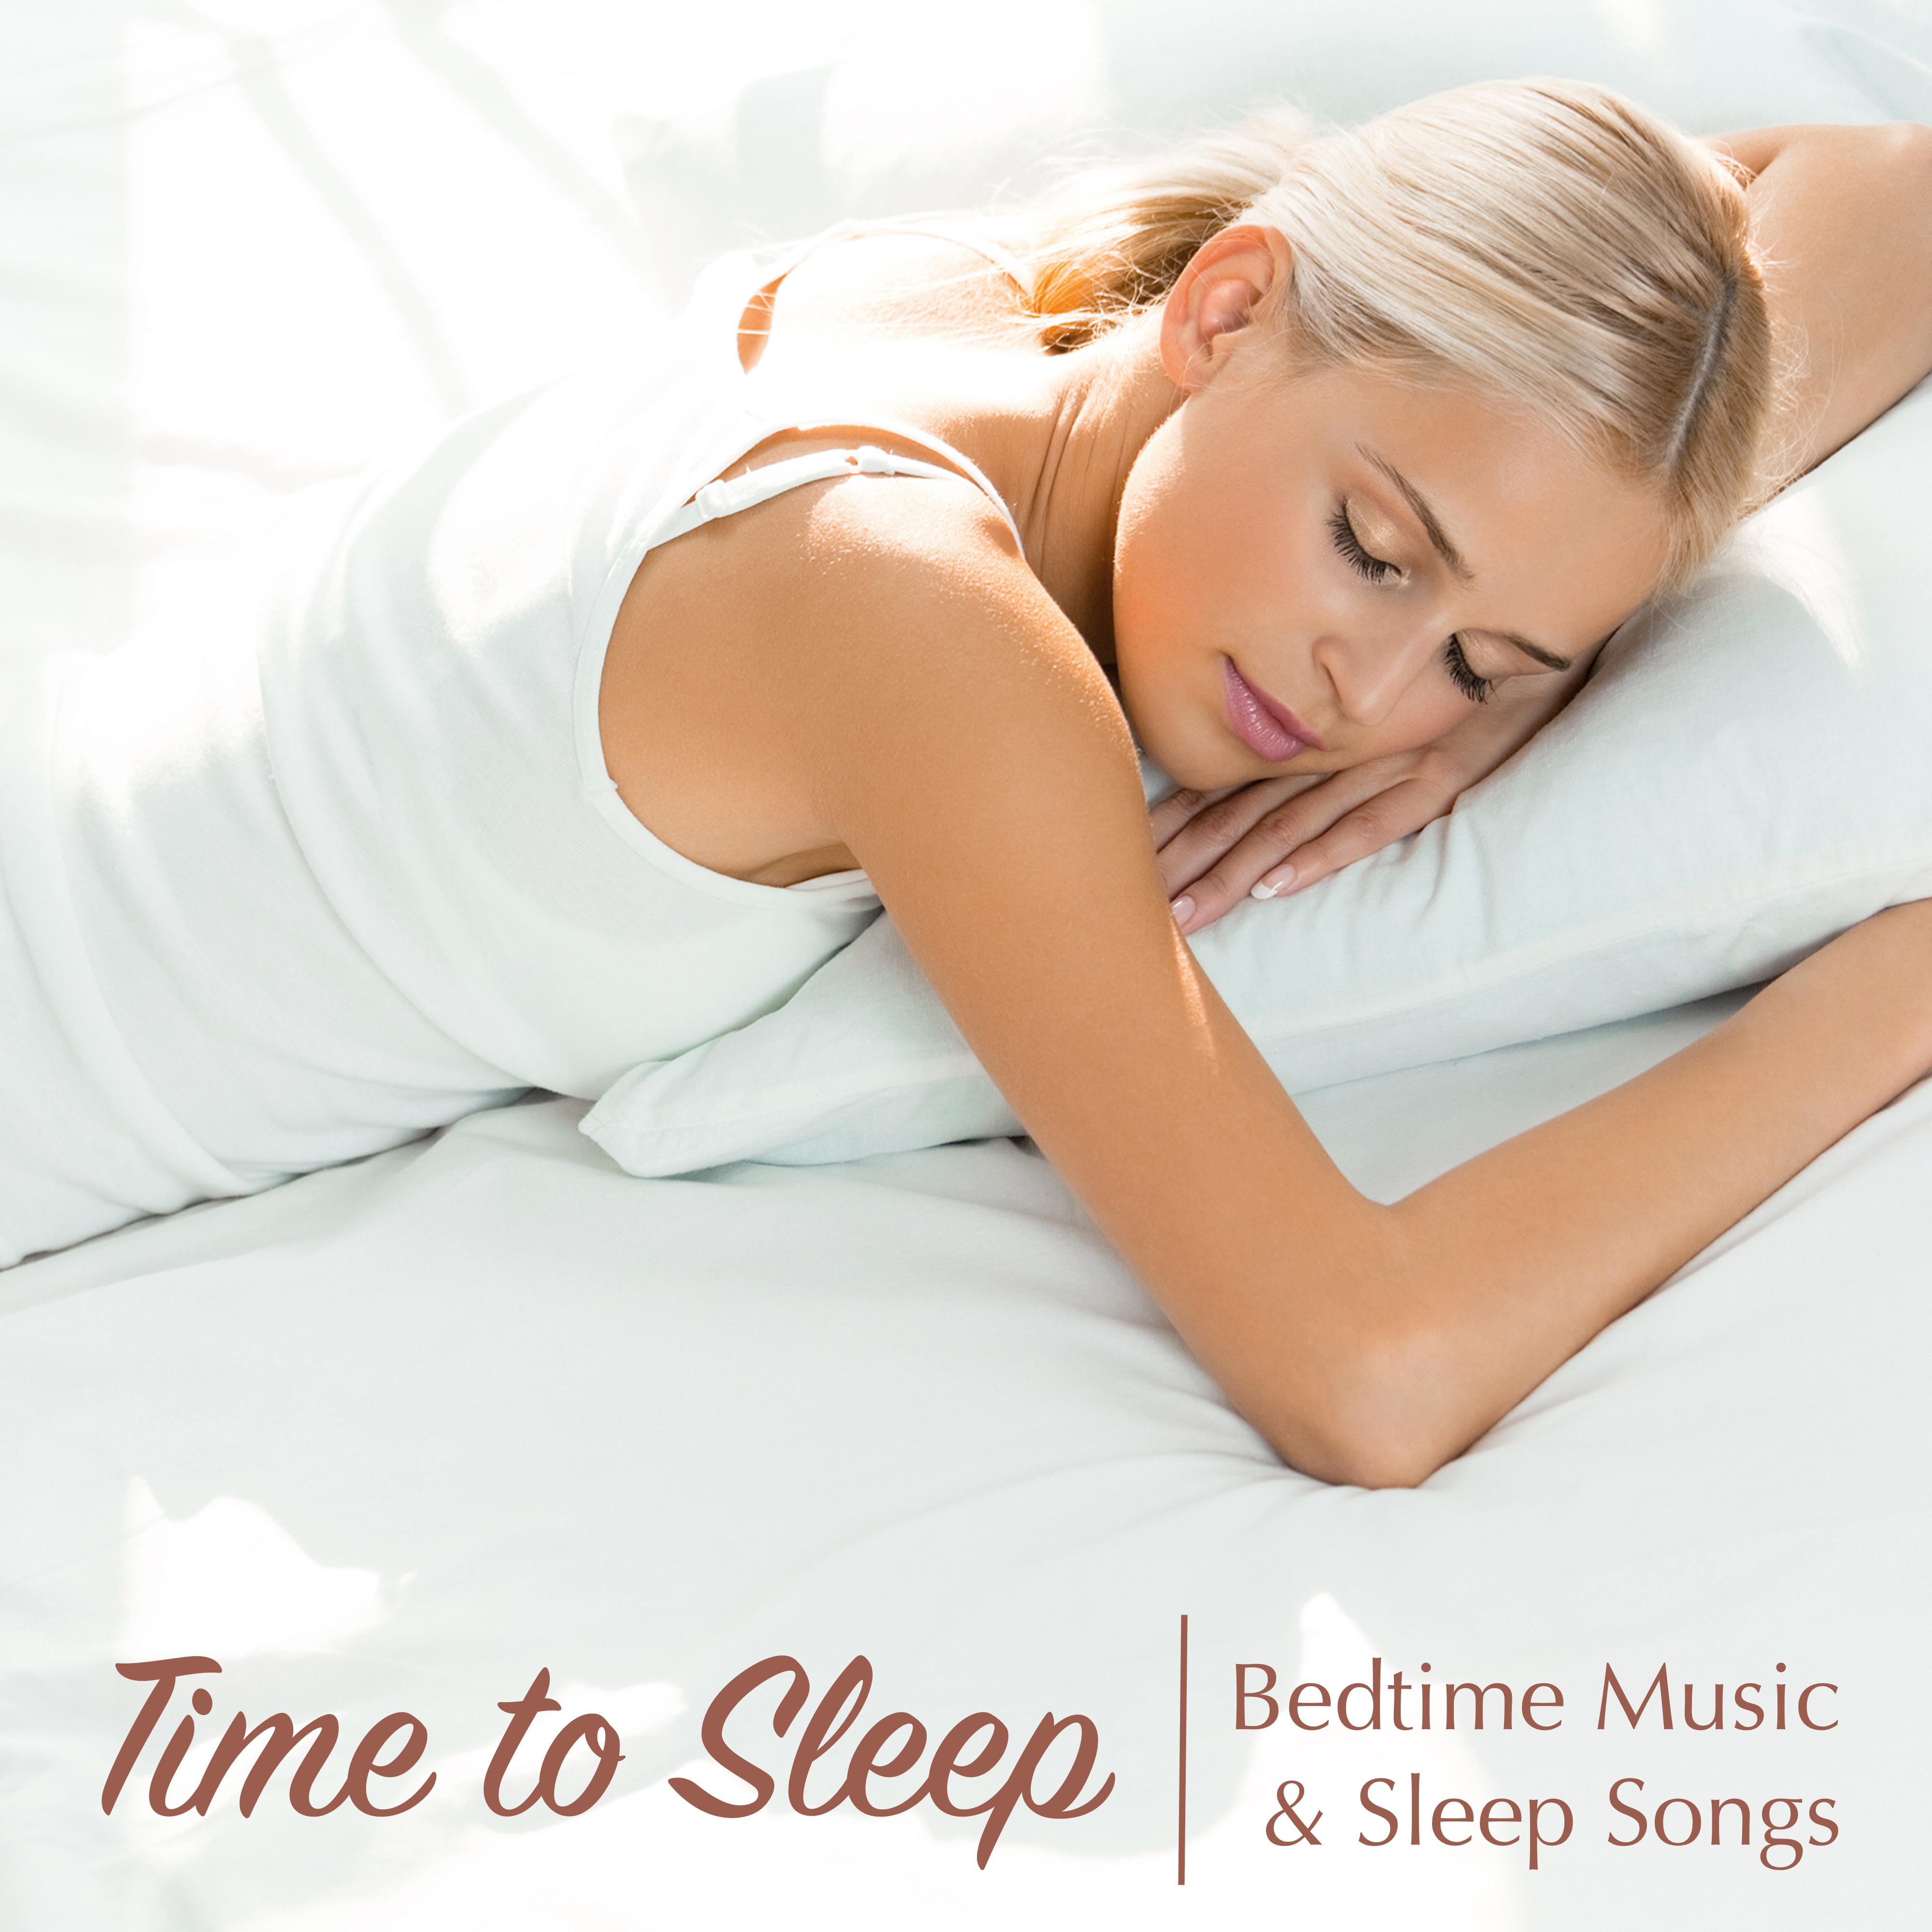 Time to Sleep - Bedtime Music & Sleep Songs